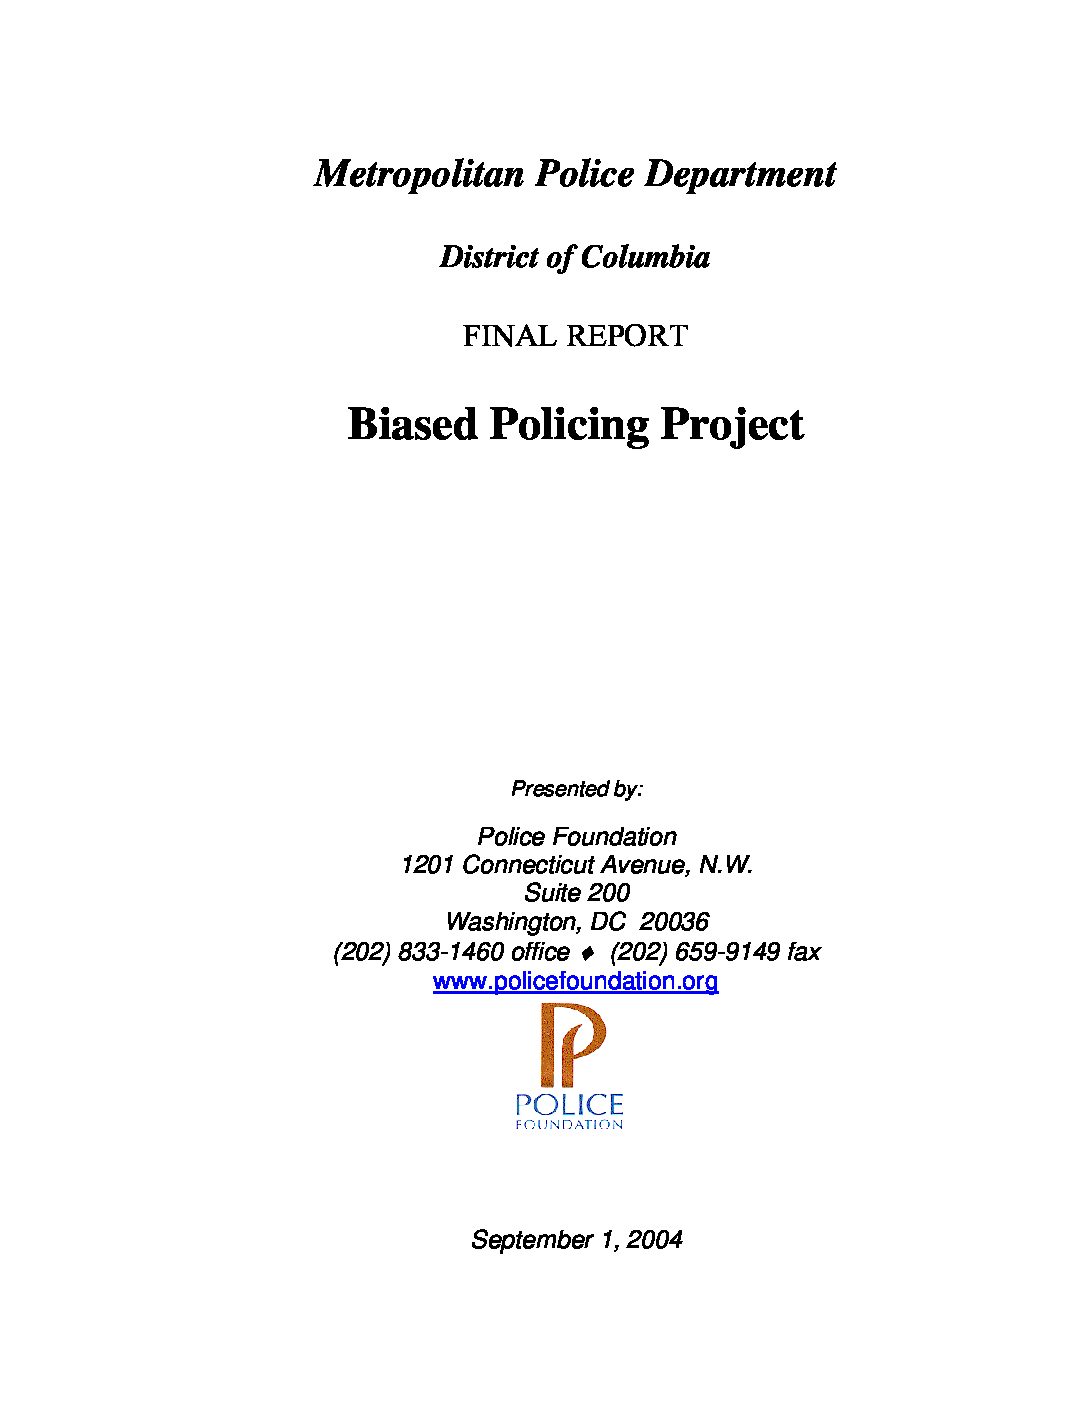 Biased Policing Report